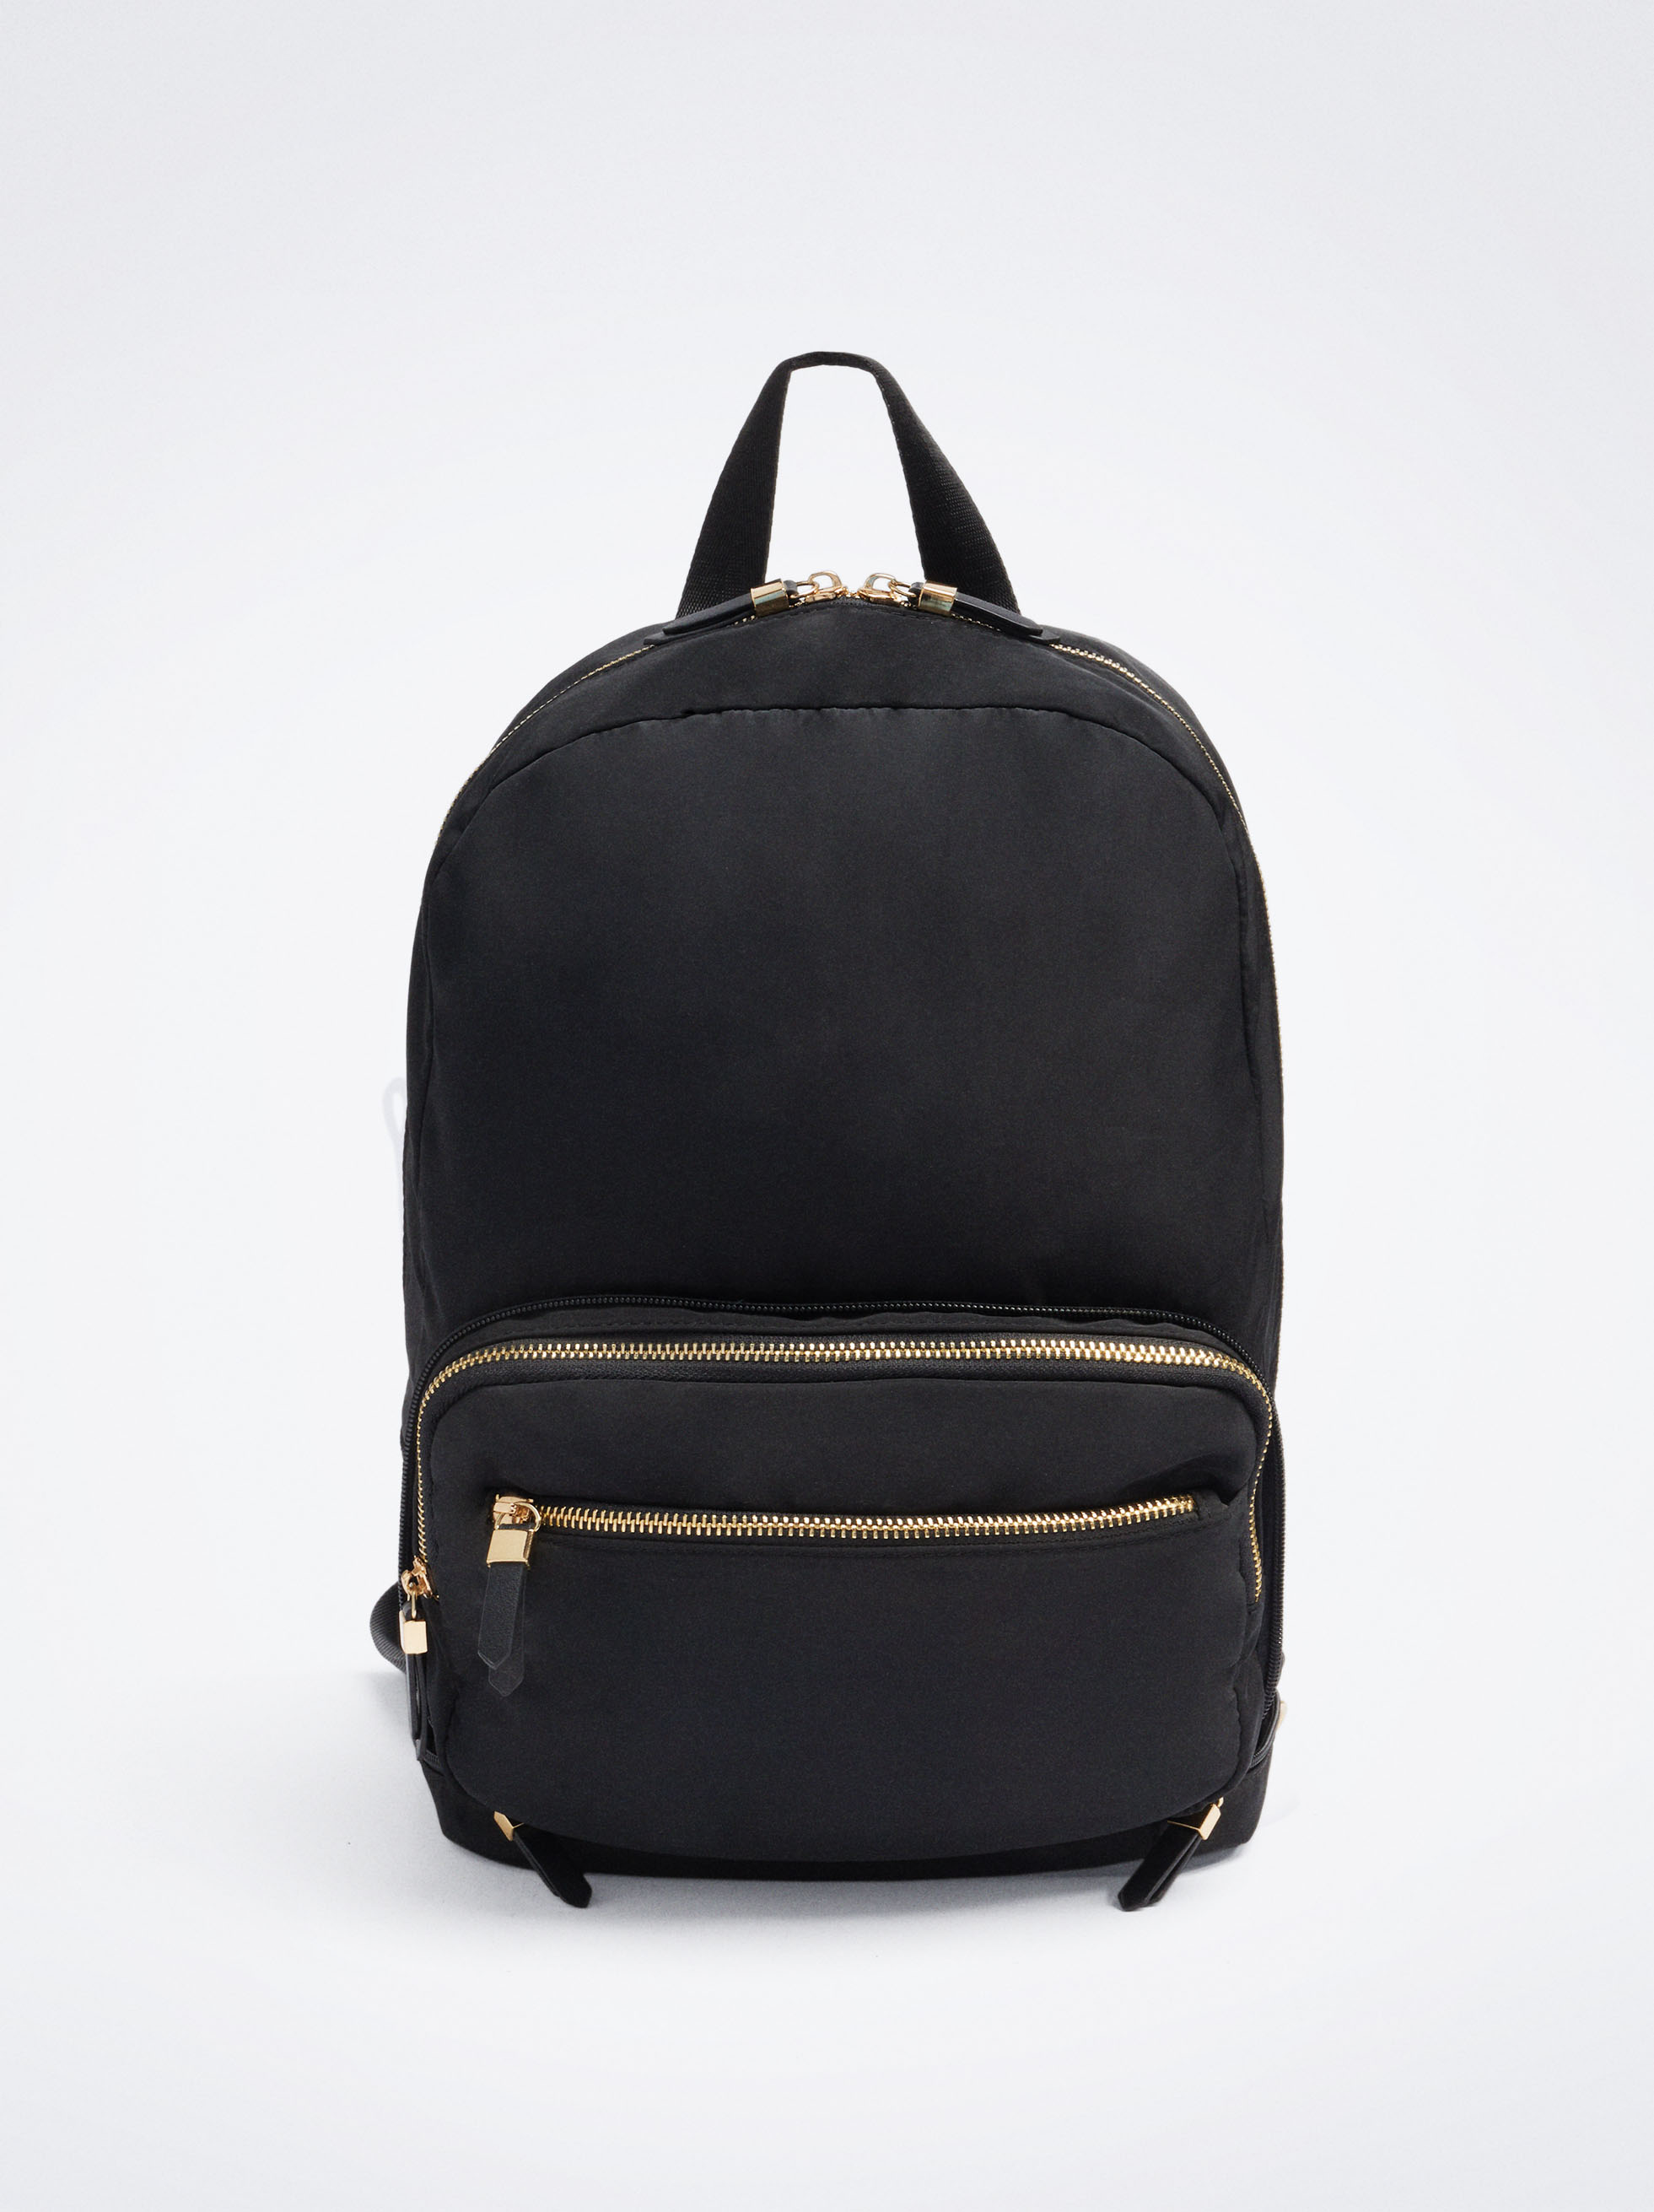 Women Backpack Purse 20 L Anti-theft Waterproof Nylon Fashion Lightweight  Travel Shoulder Bag